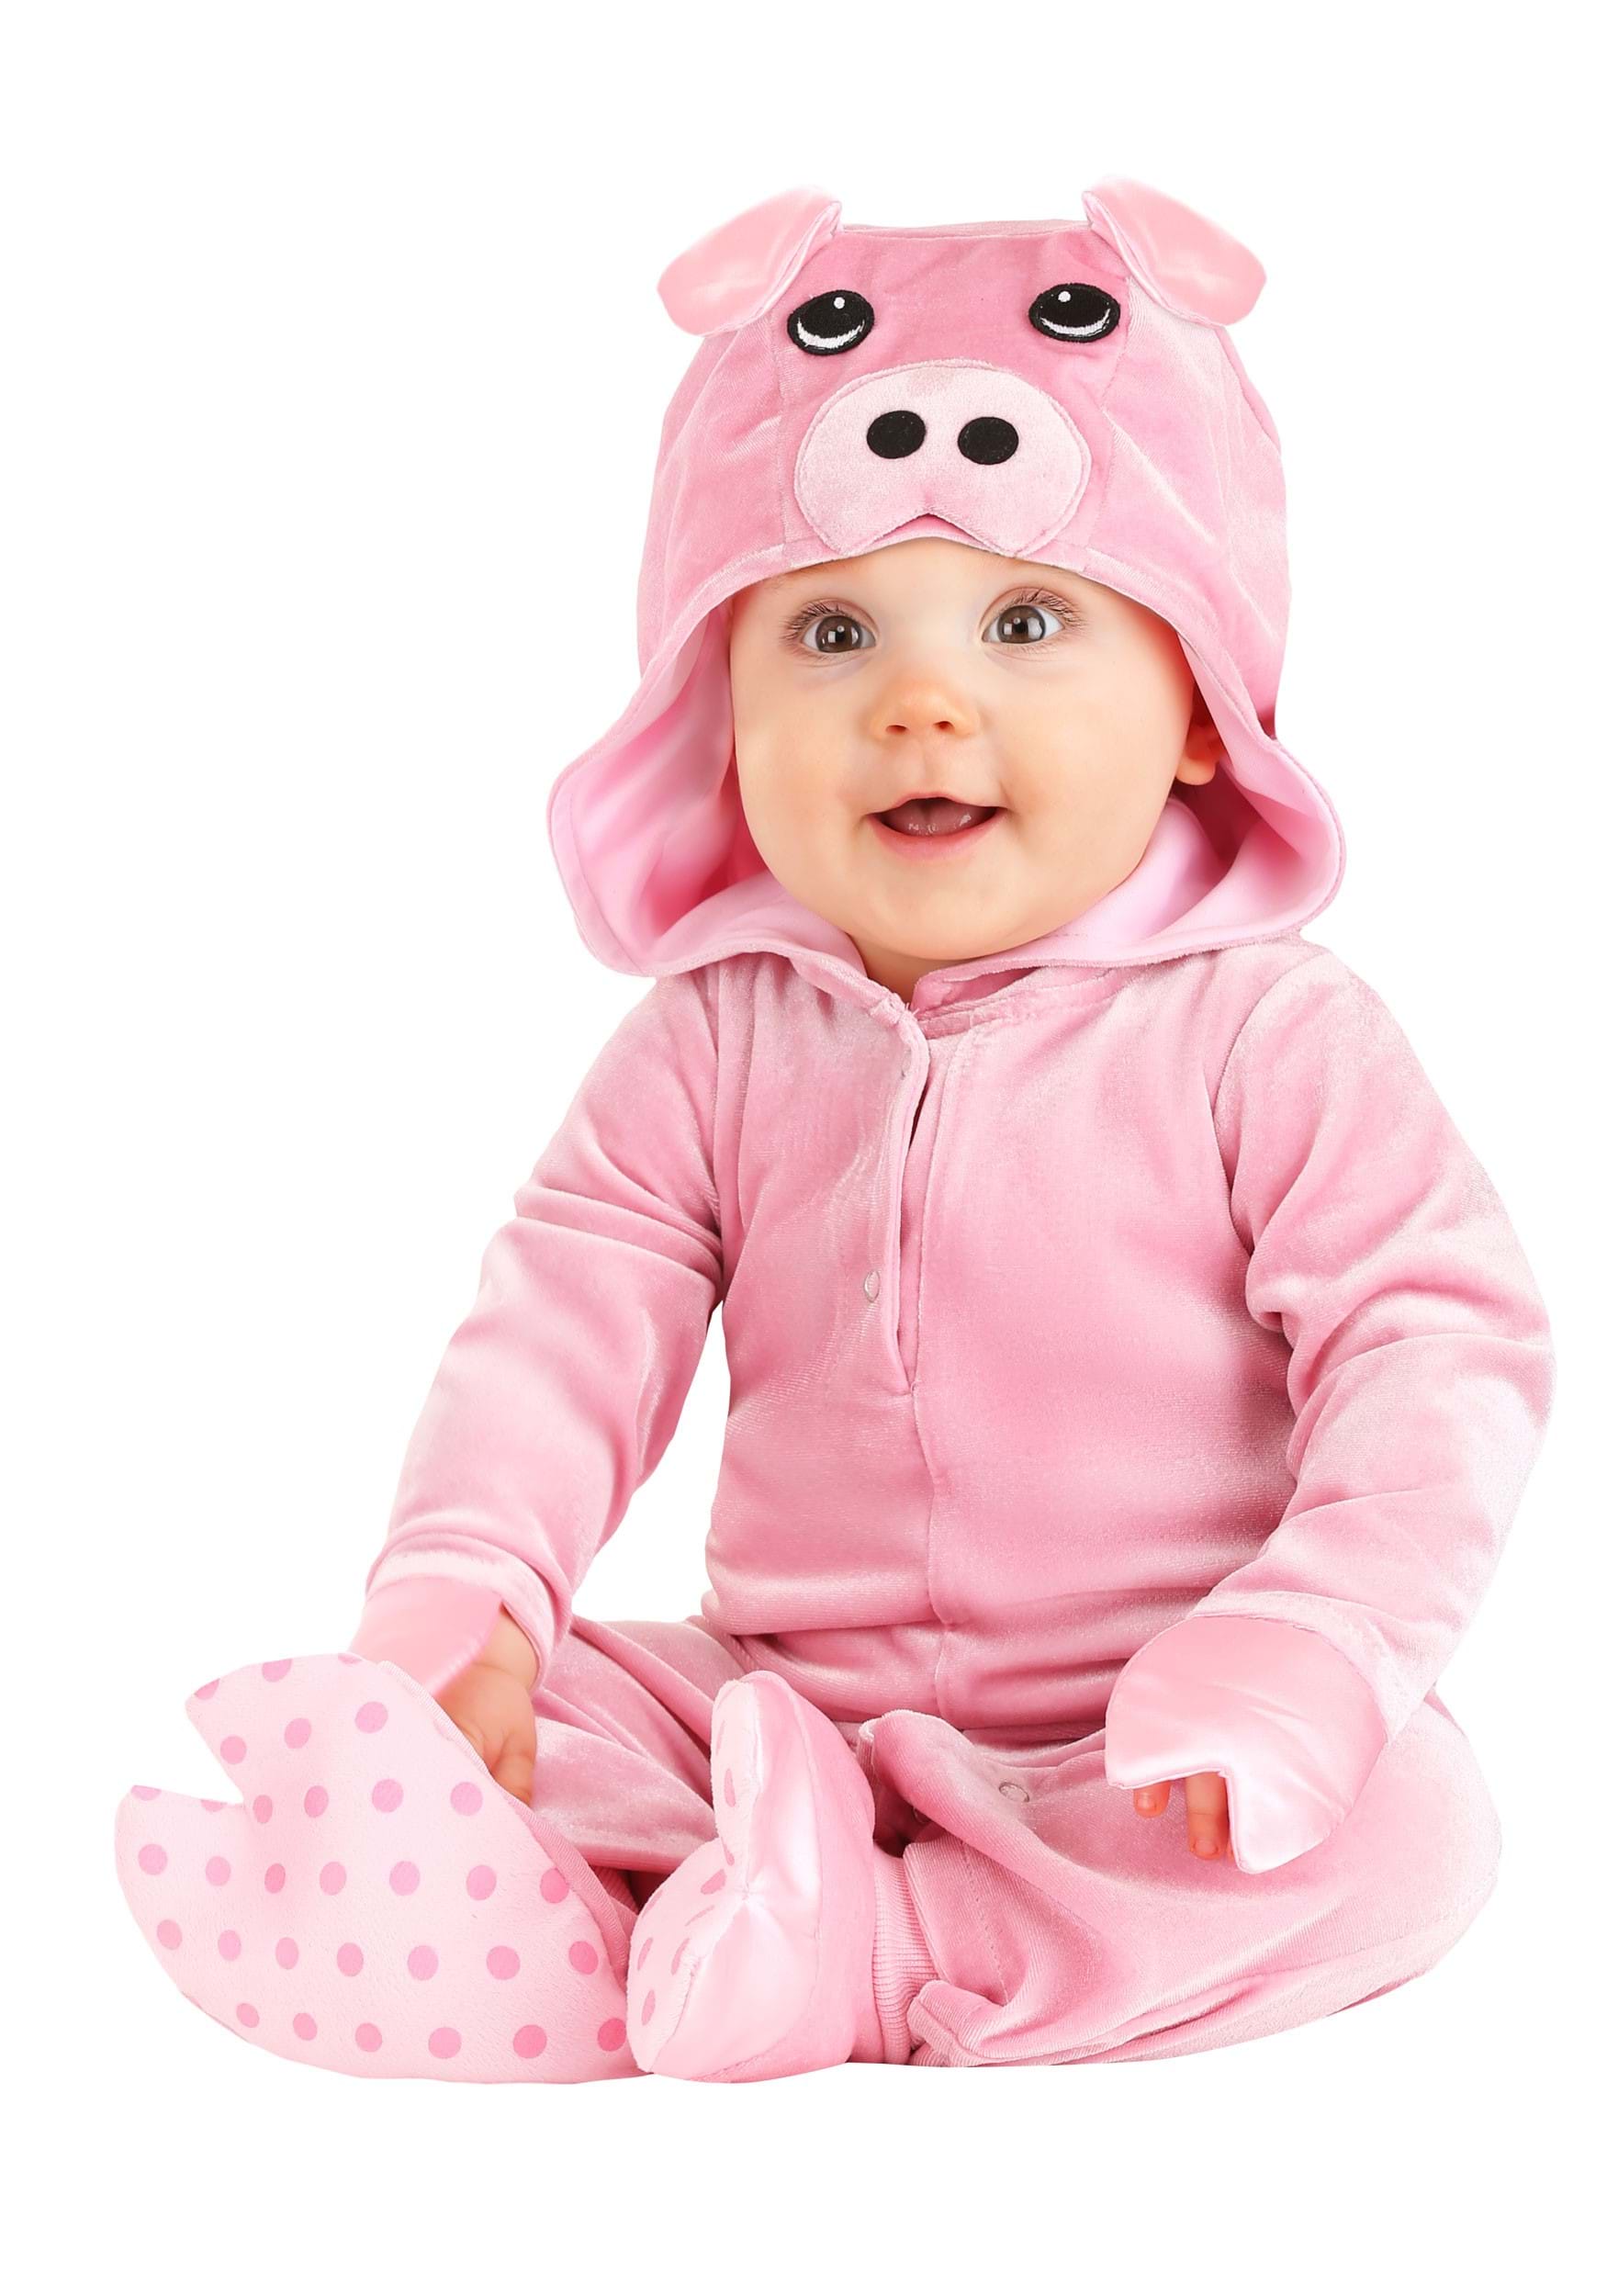 Infant Rosy Pig Costume